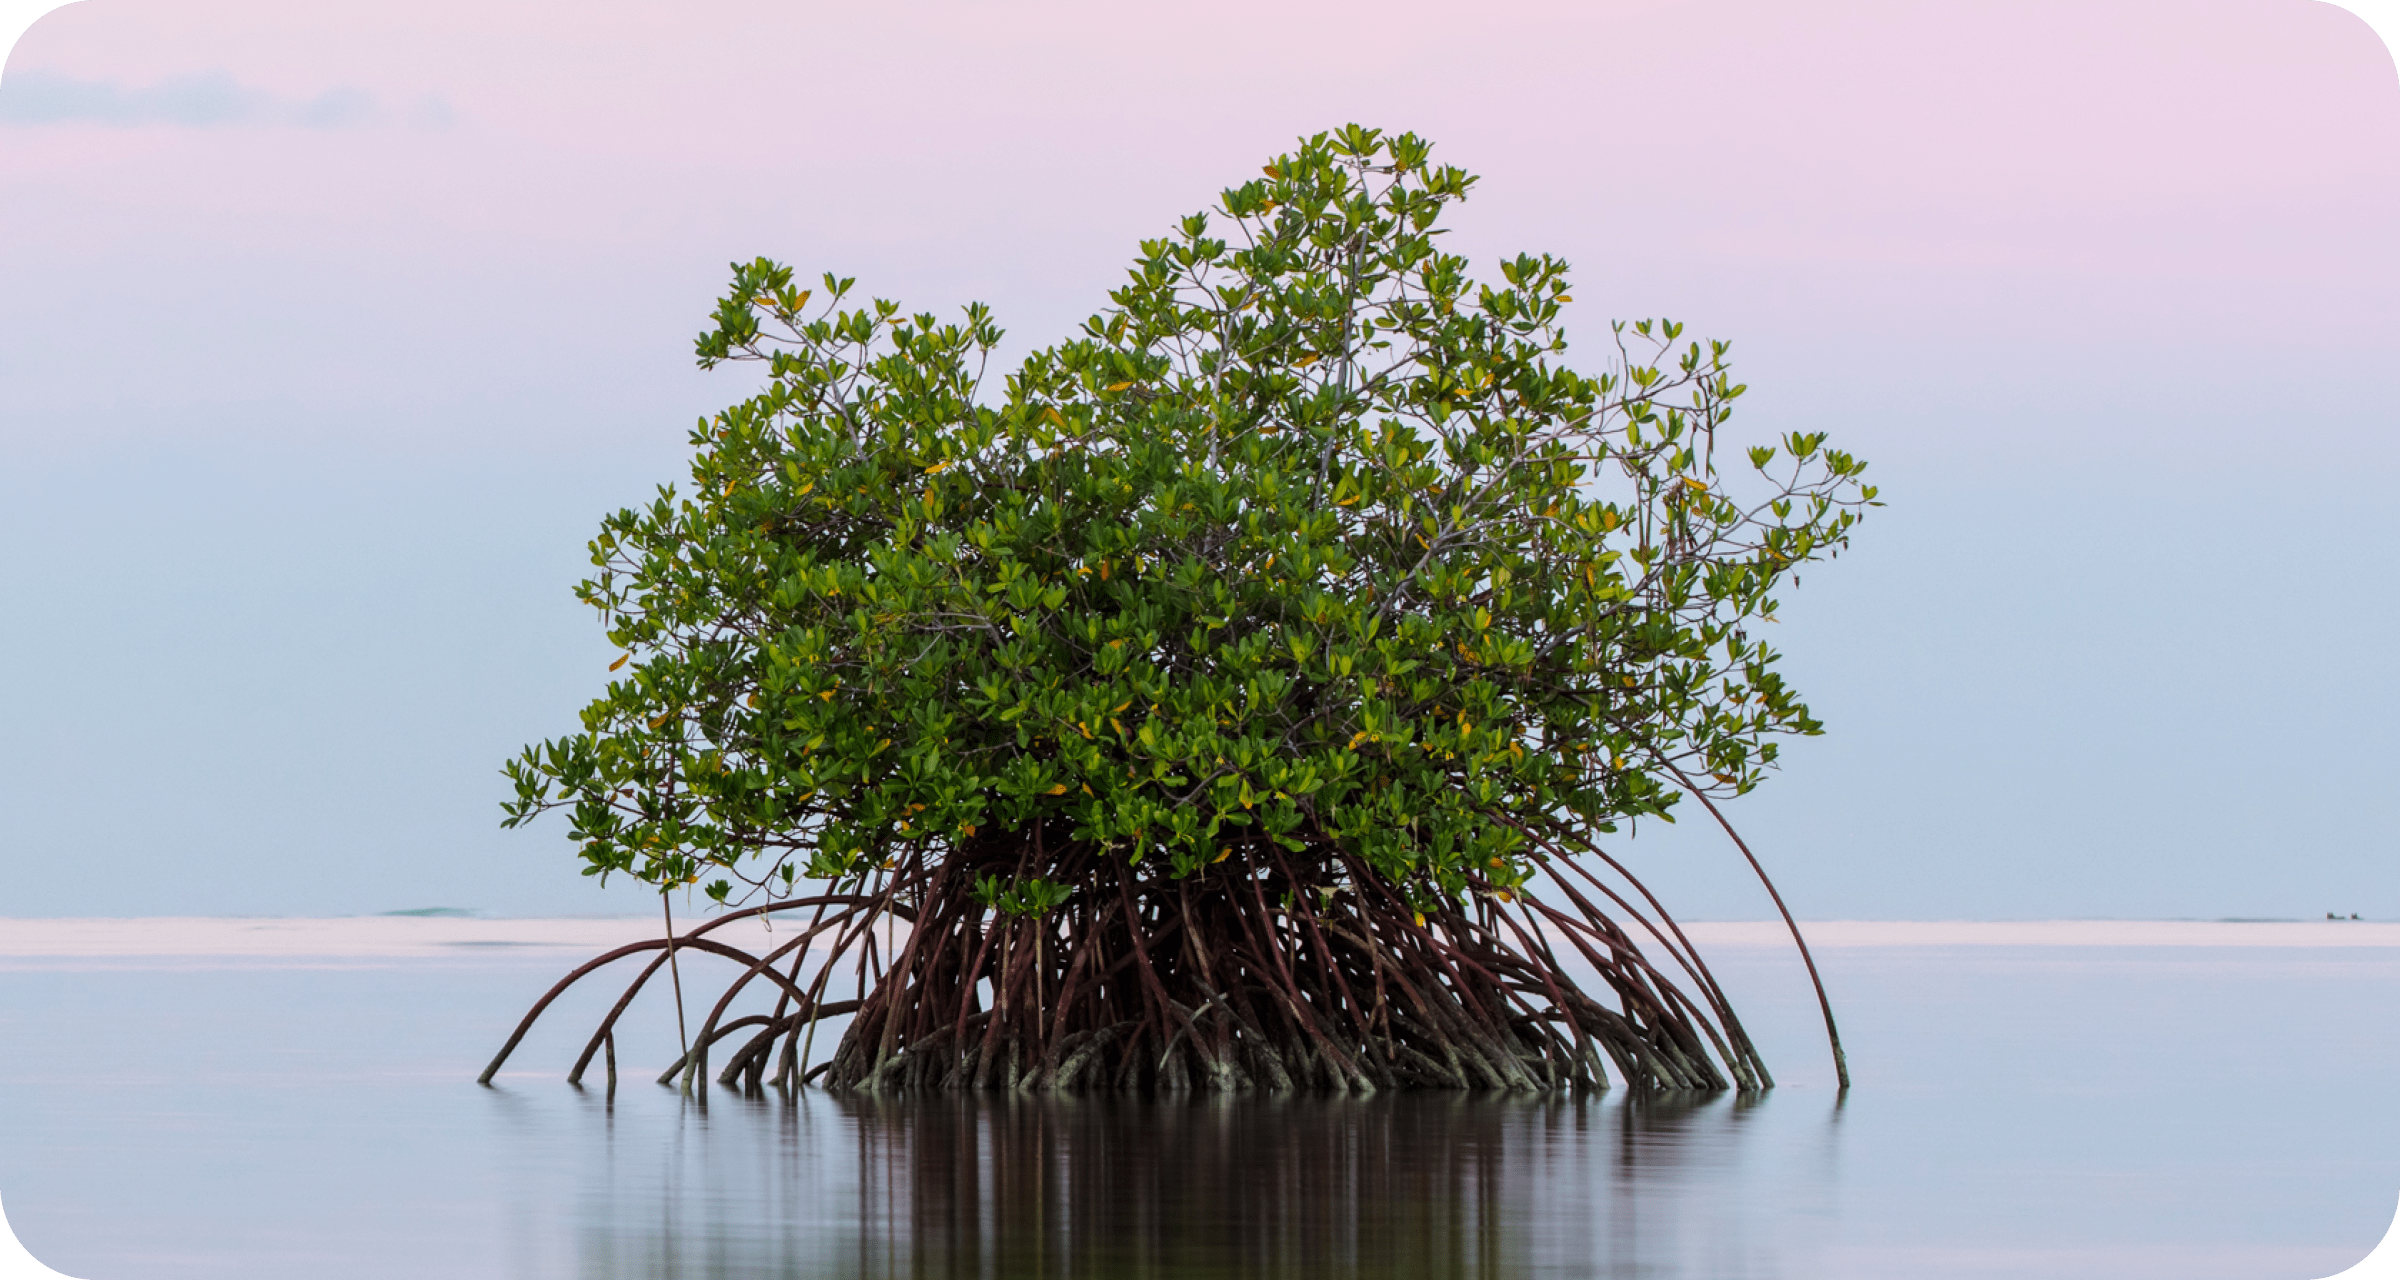 A mangrove plant at sunset